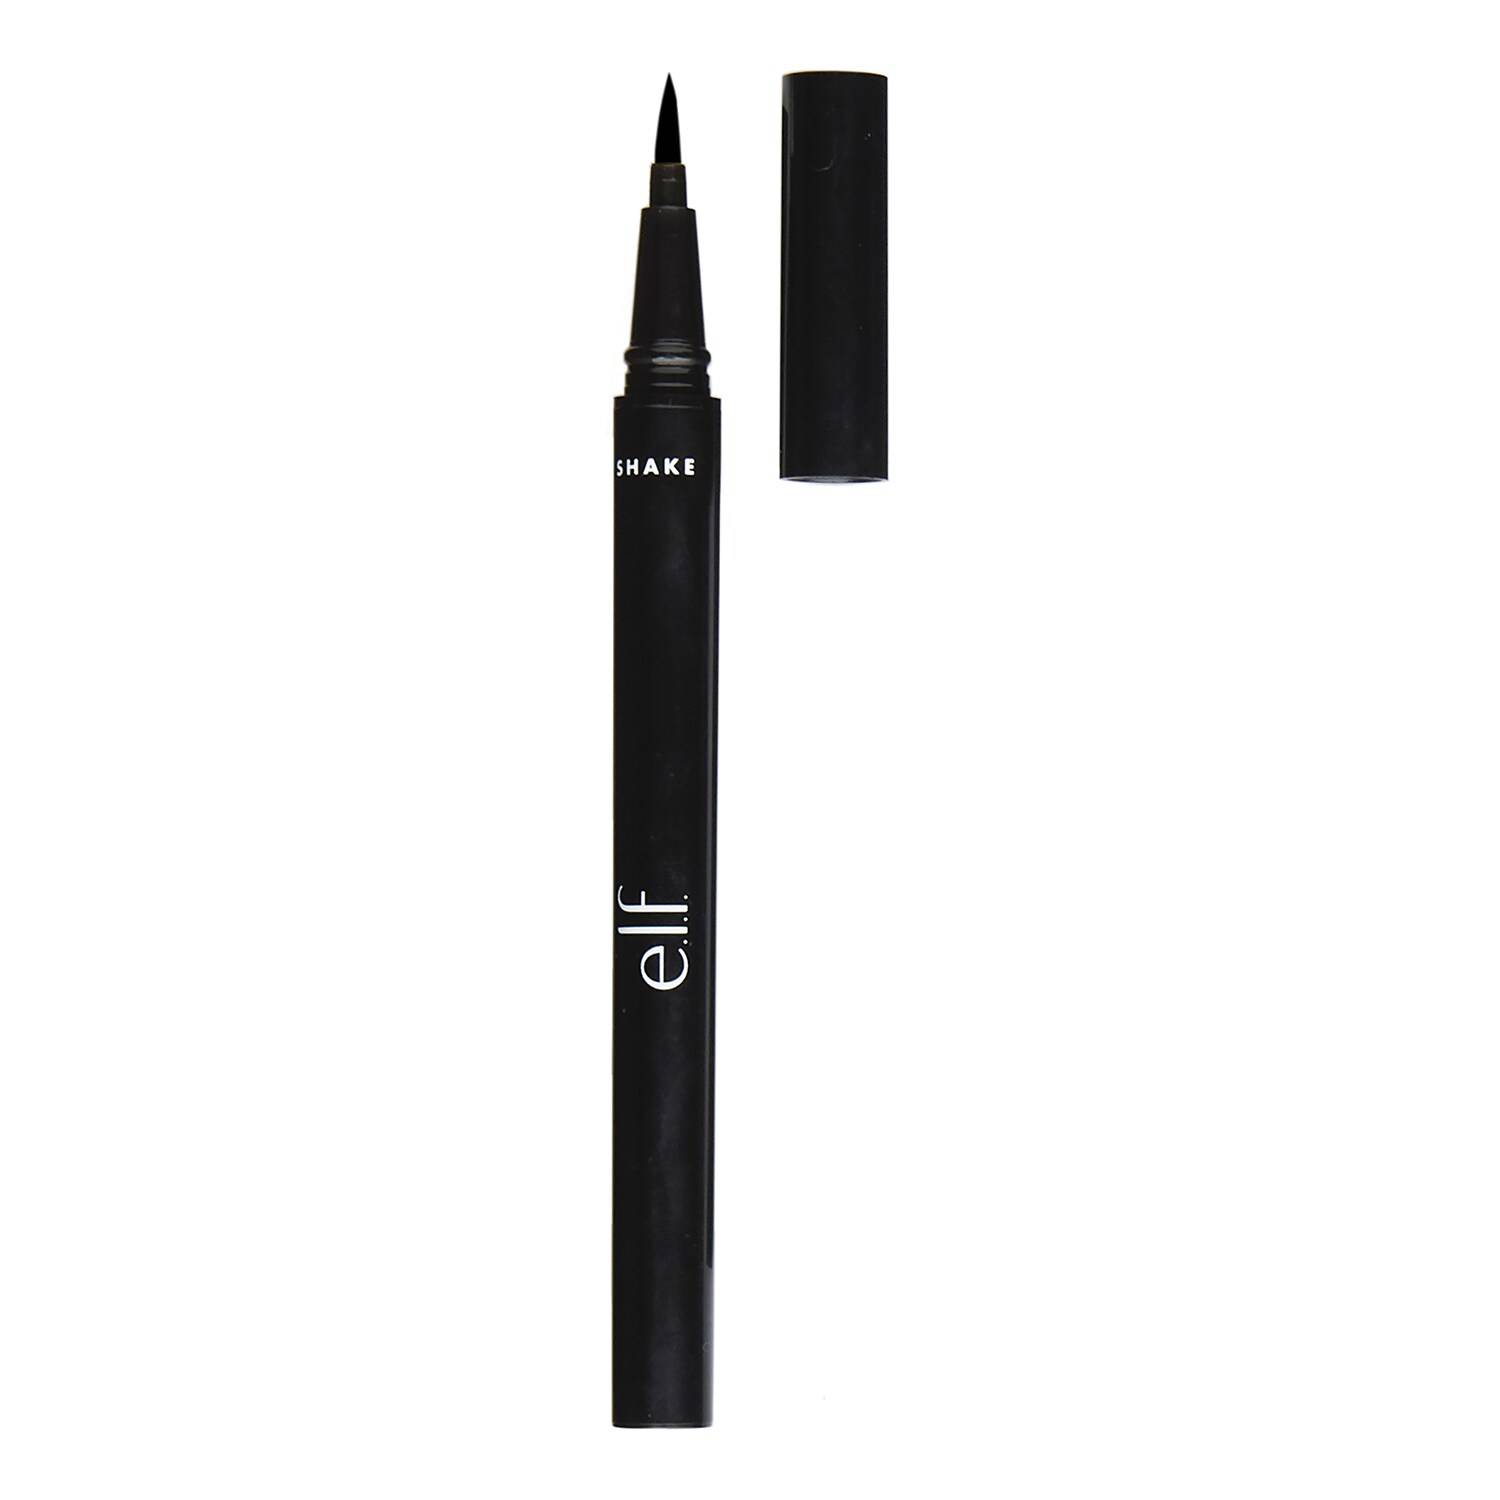 e.l.f. Intense H2O Proof Eyeliner Pen Jet Black 0.7g